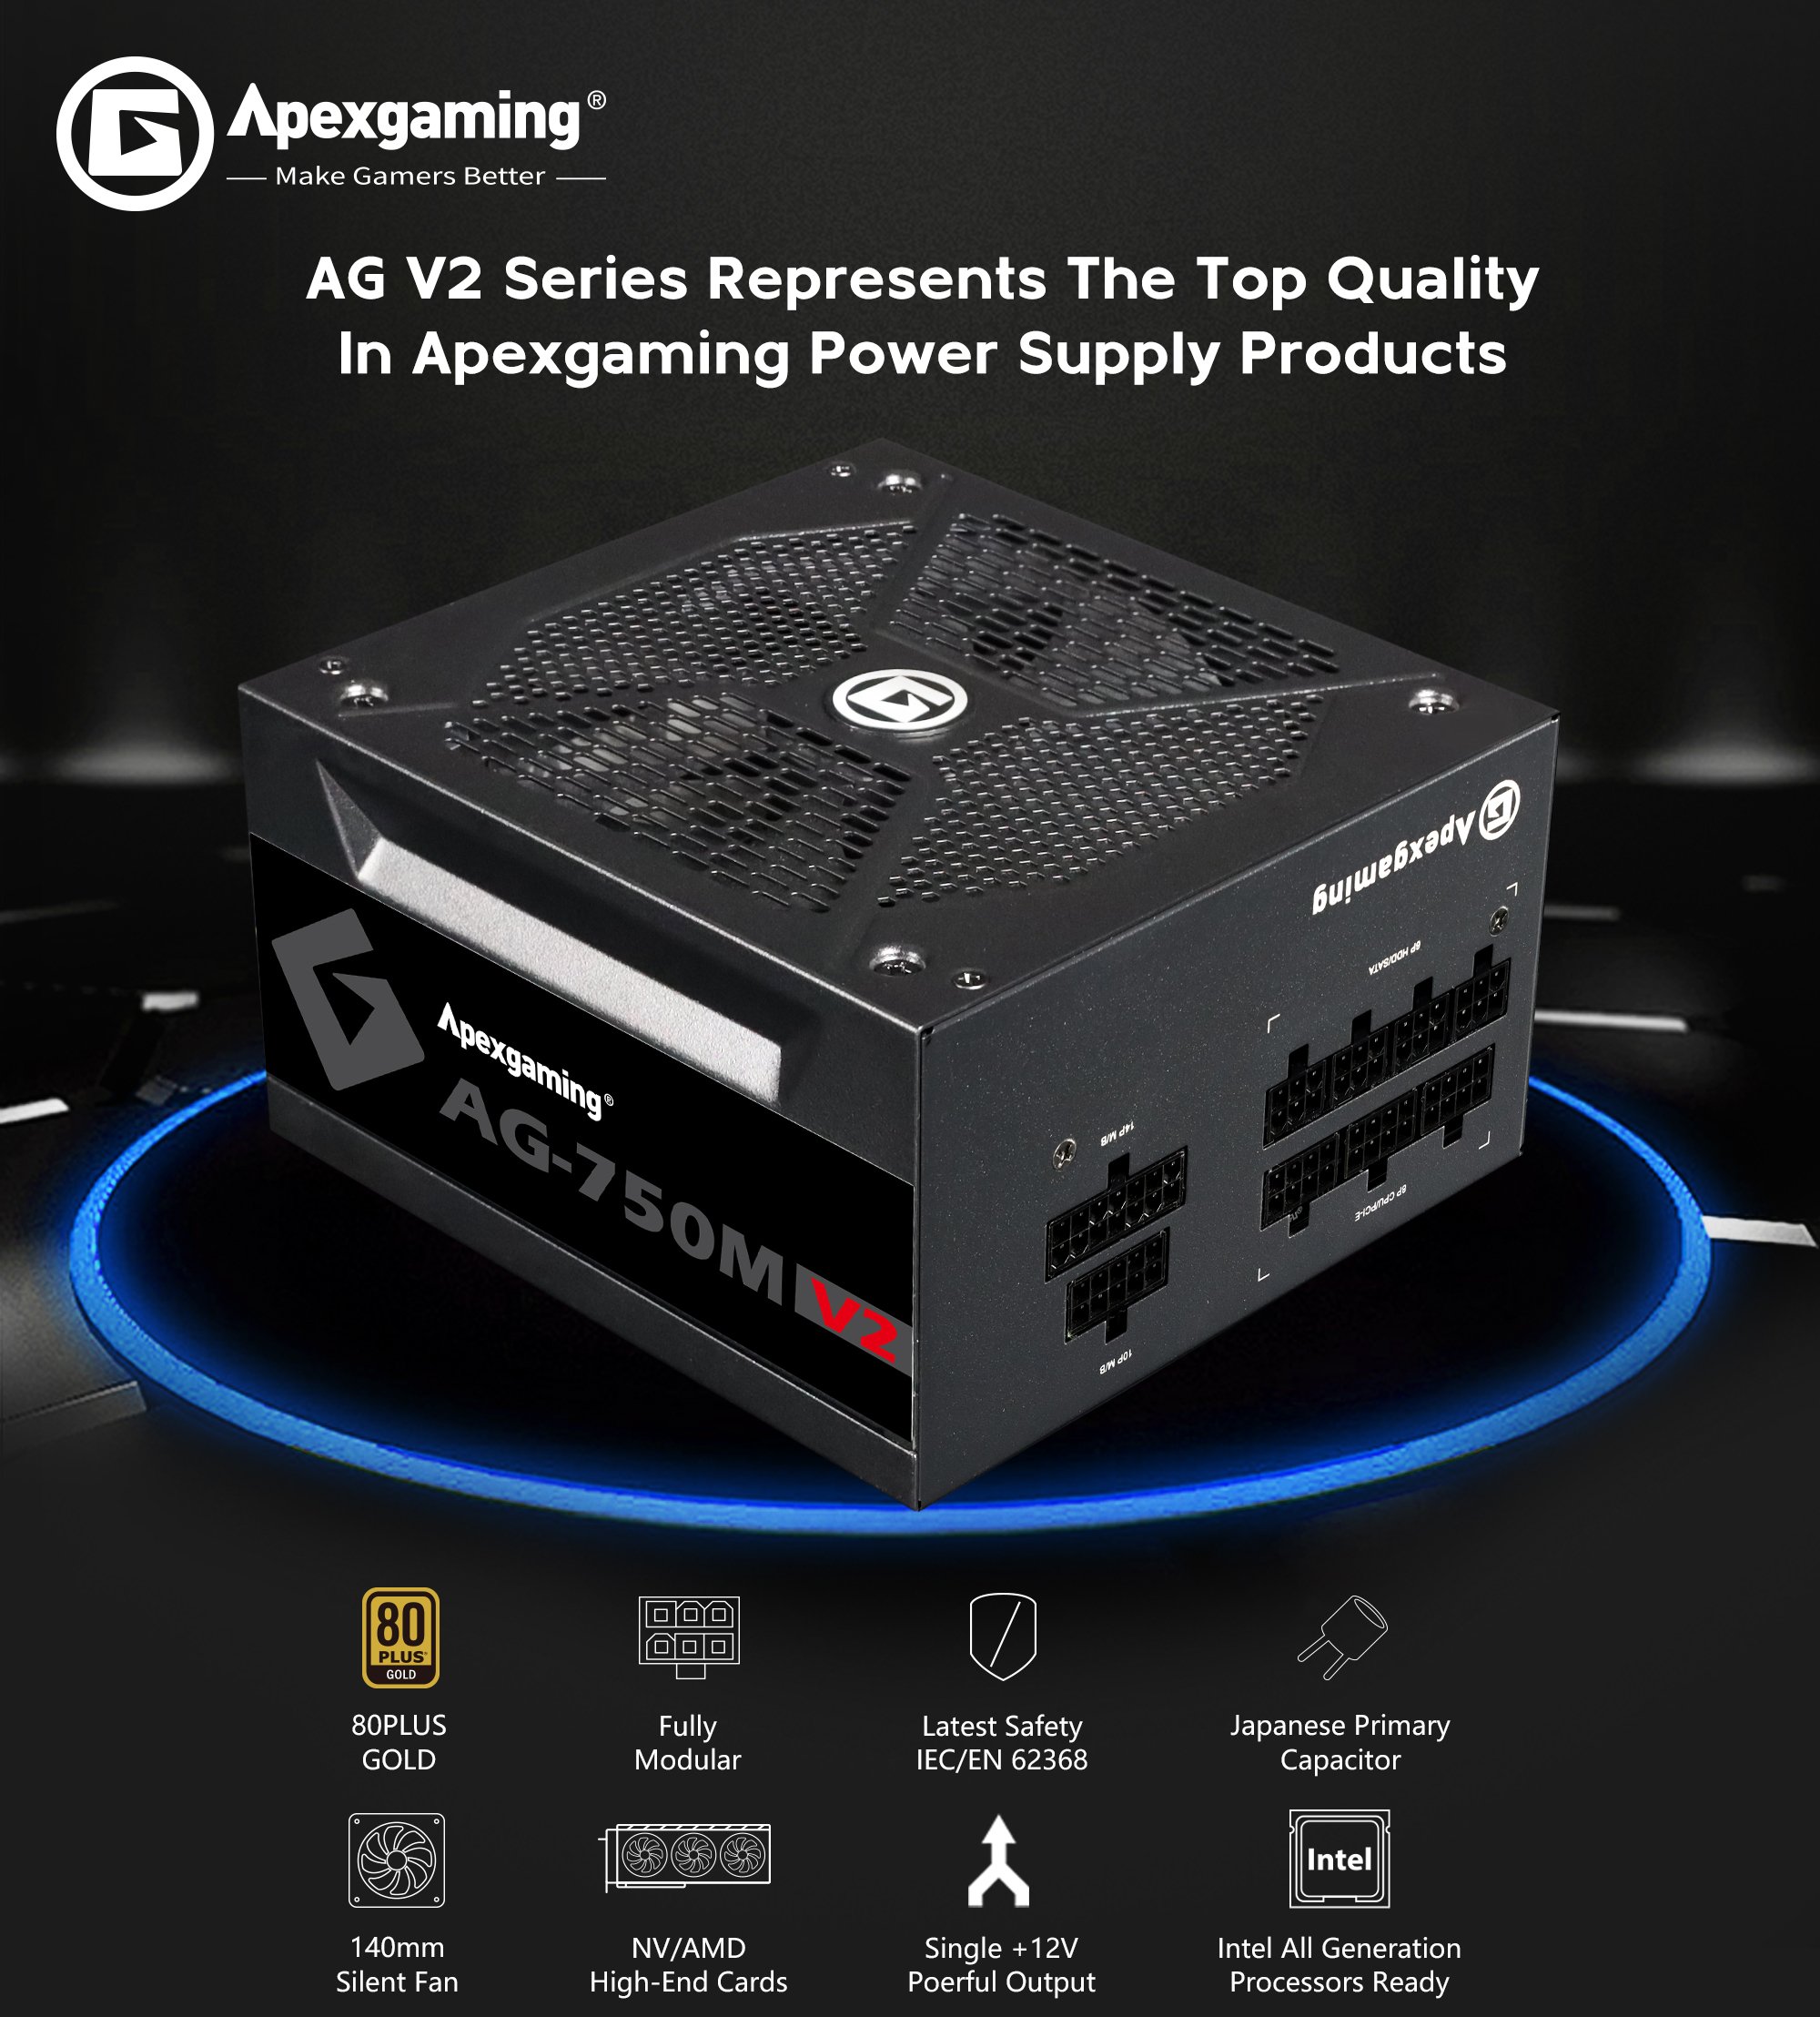 PSU for ApexGaming ATX Full Modular 80plus Gold Chicken Eating Game Power  Supply 750W Power Supply AJ-750M